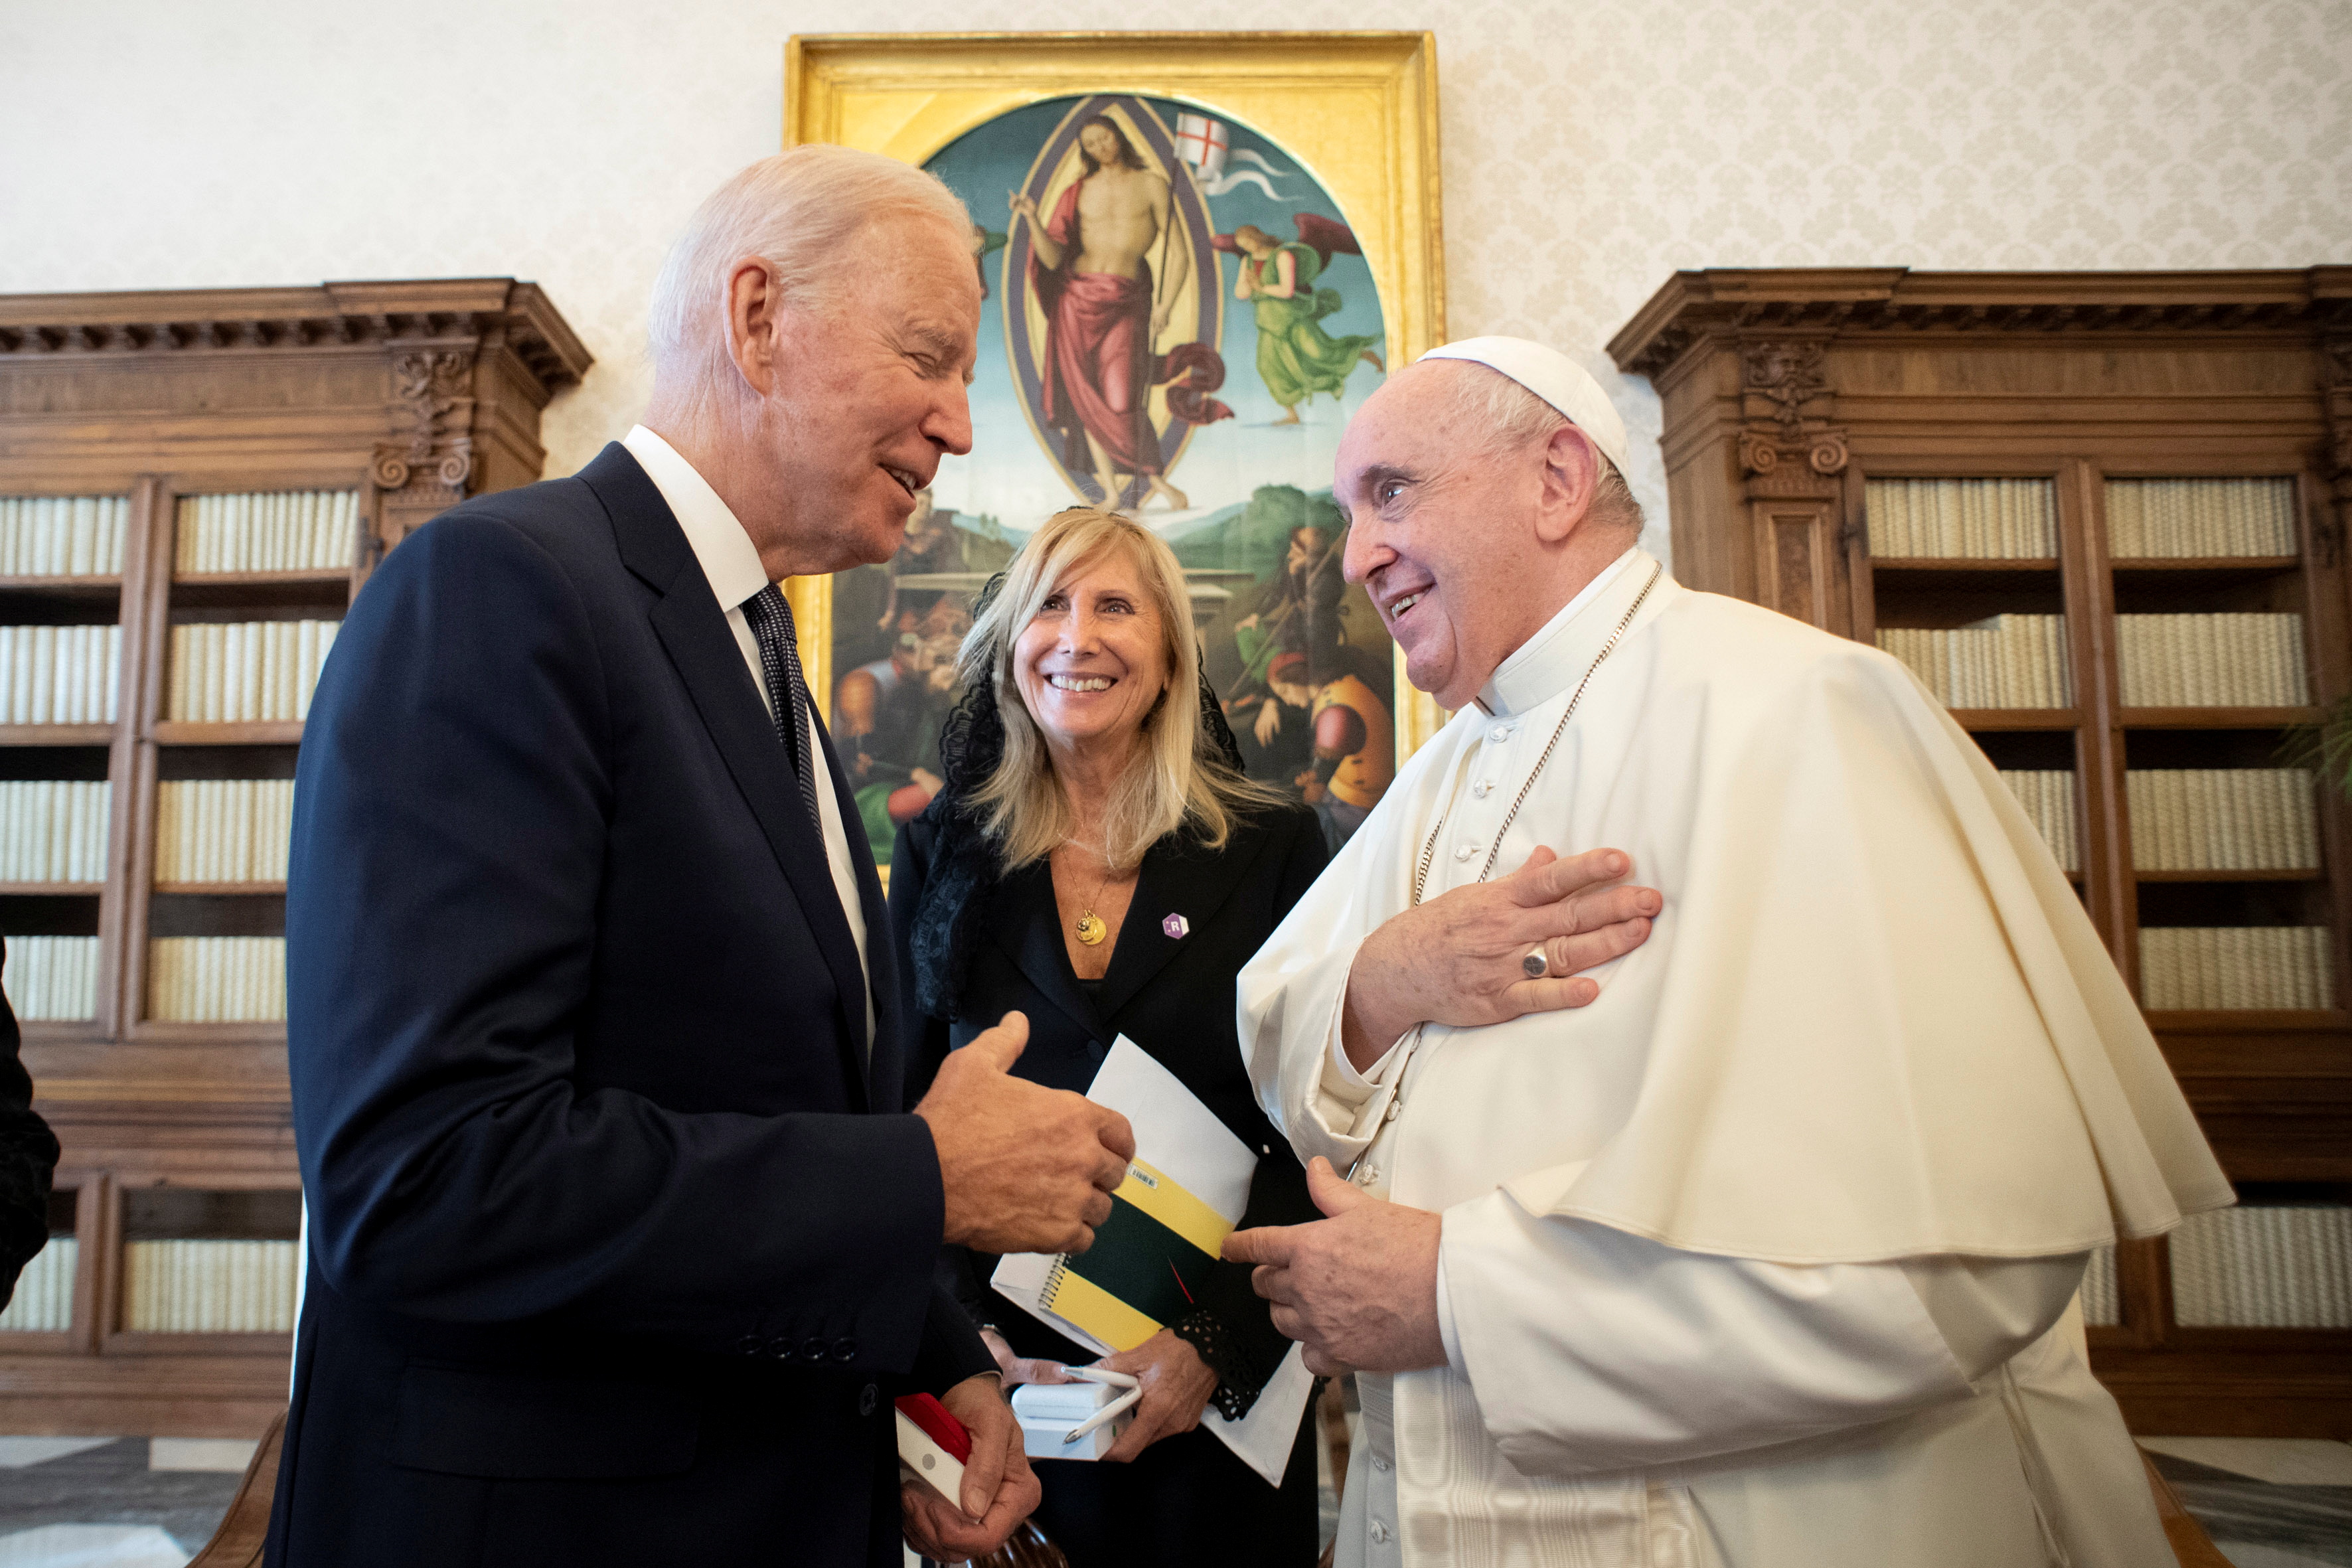 Emotional Biden praises Pope Francis' style of Catholicism | Reuters